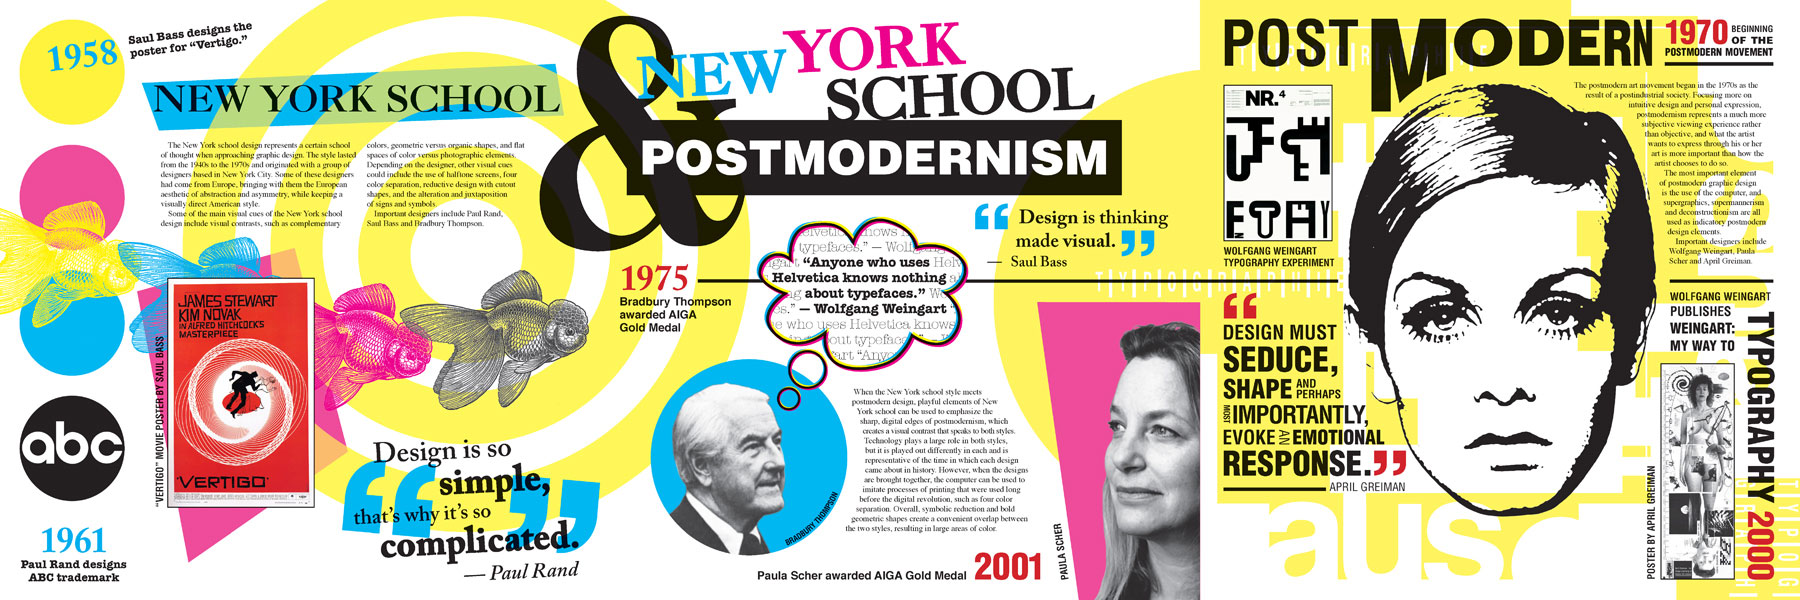 New York School and Post Modern